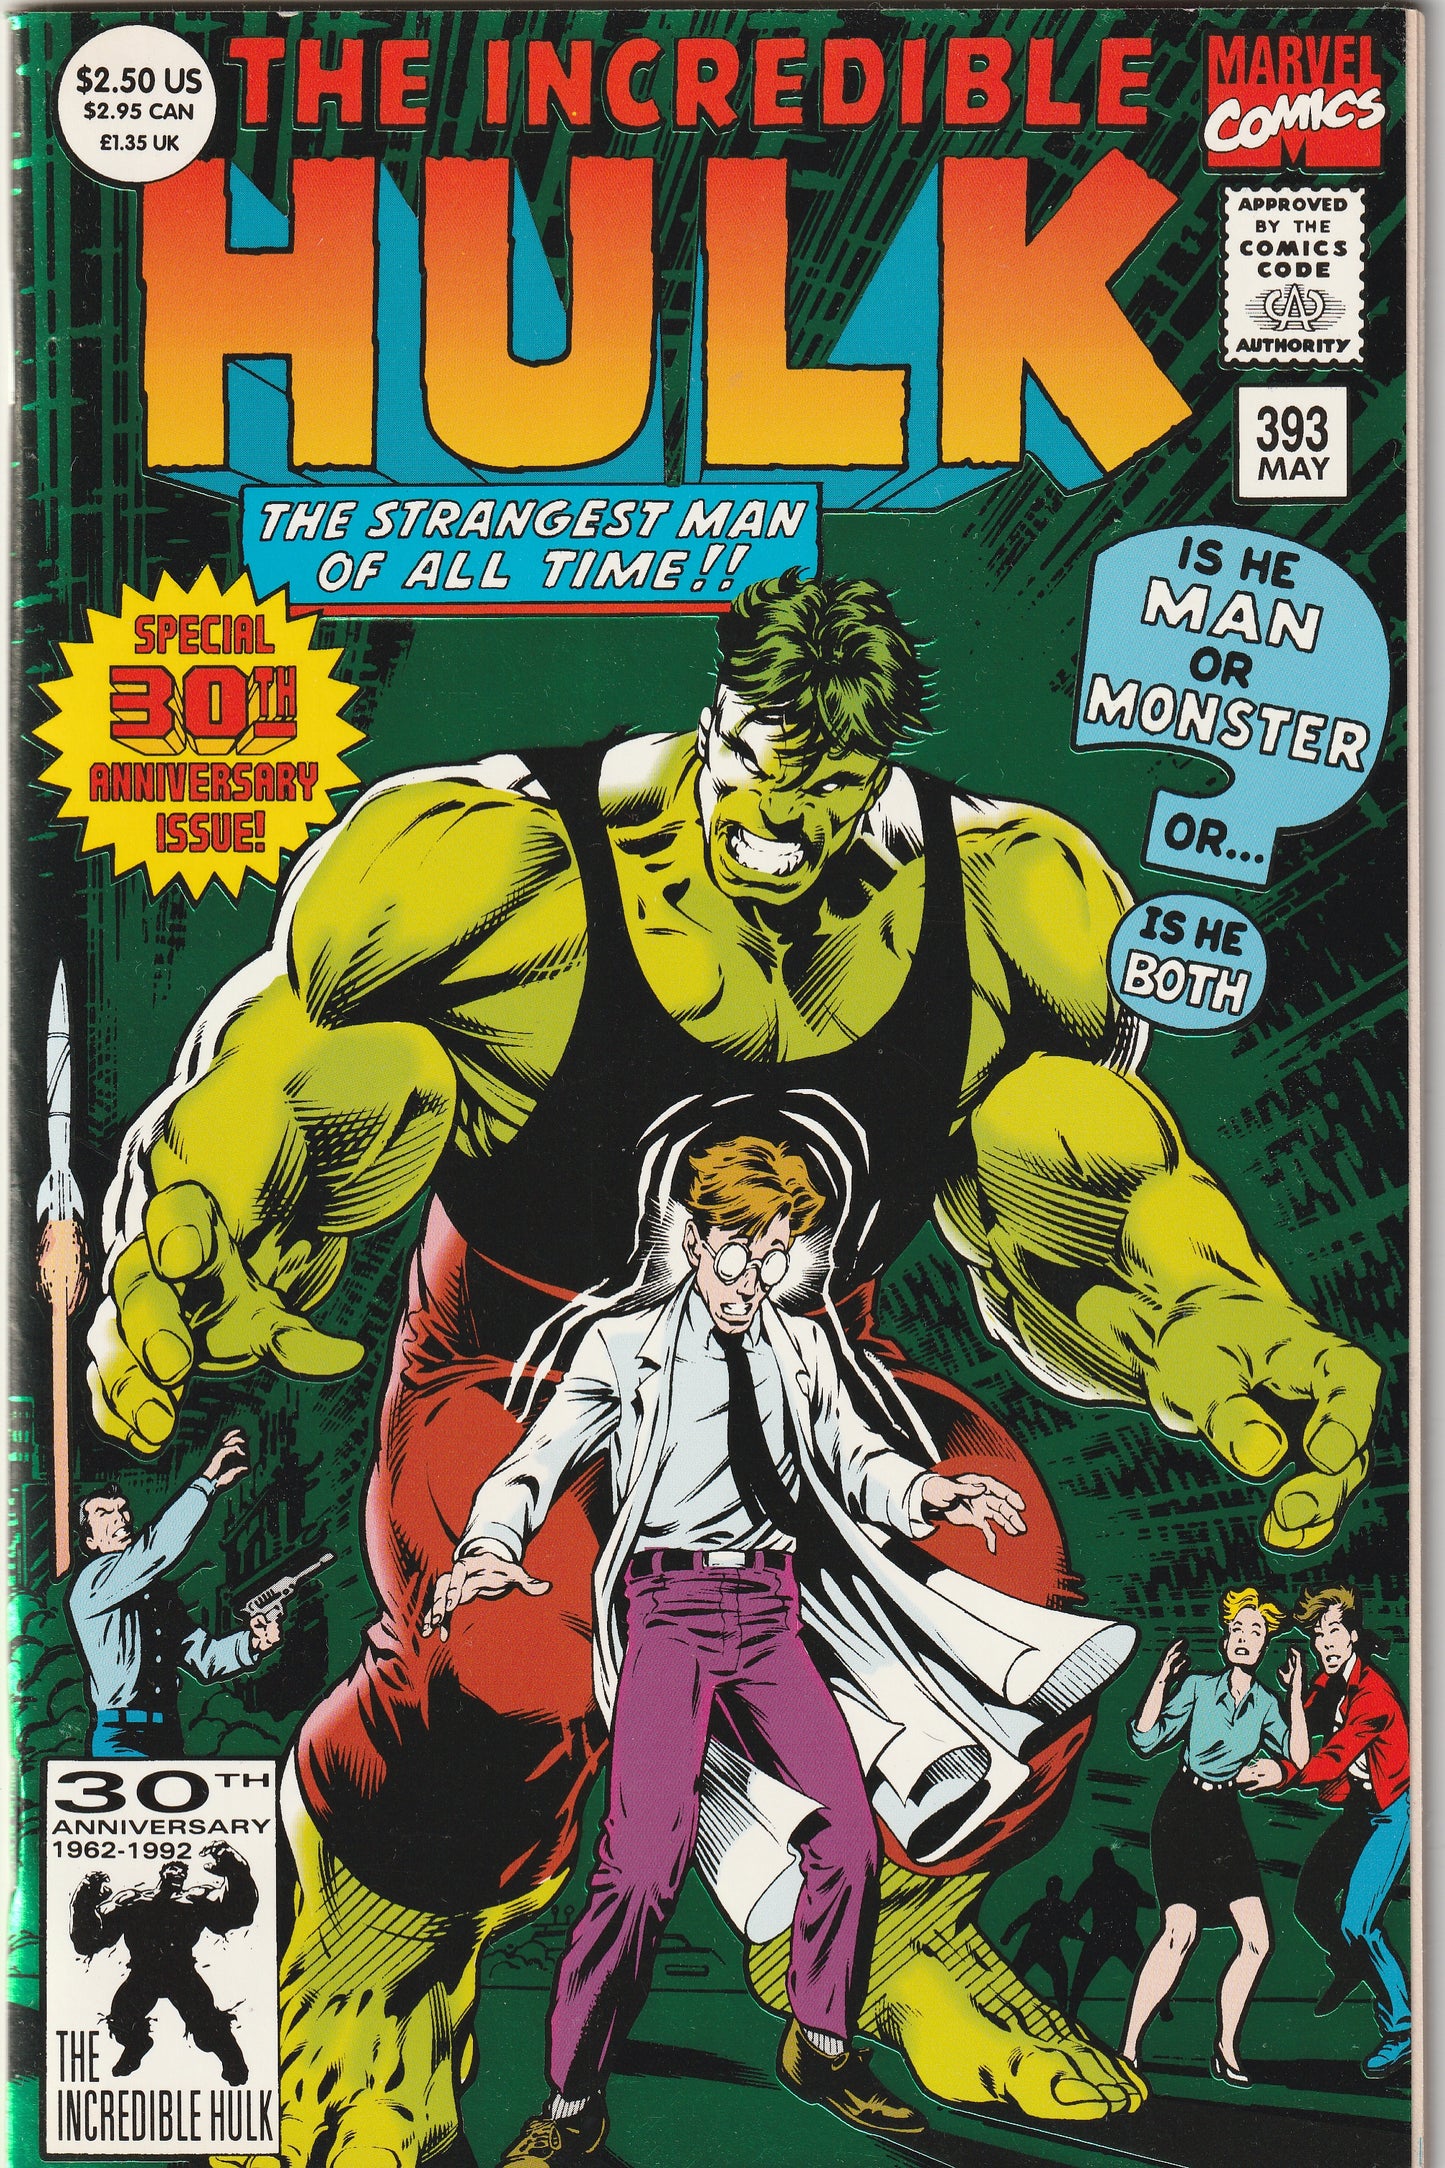 Incredible Hulk #393 (1992) - Green Foil, 30th anniversary cover